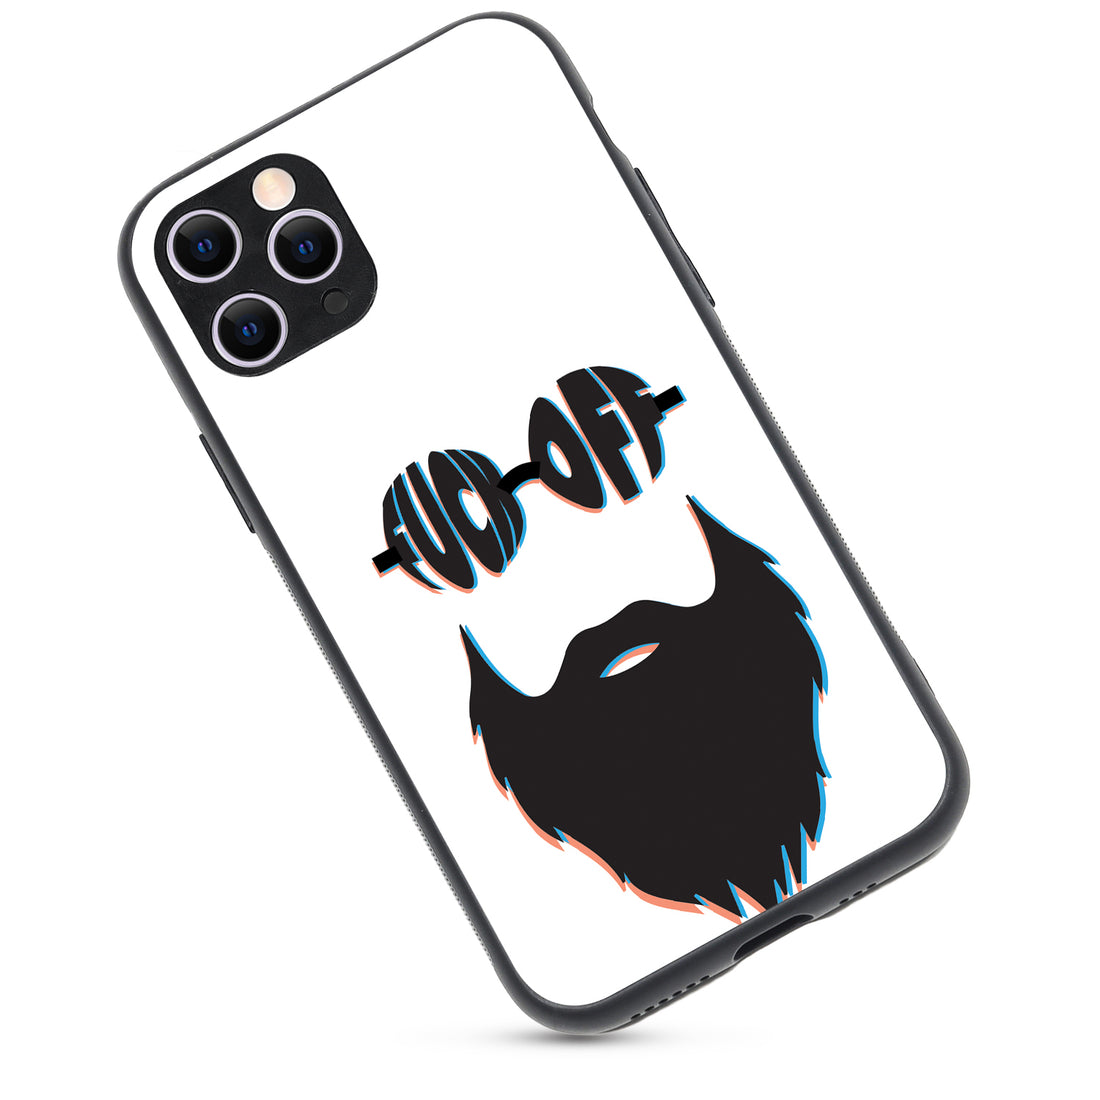 Beard White Masculine iPhone 11 Pro Case